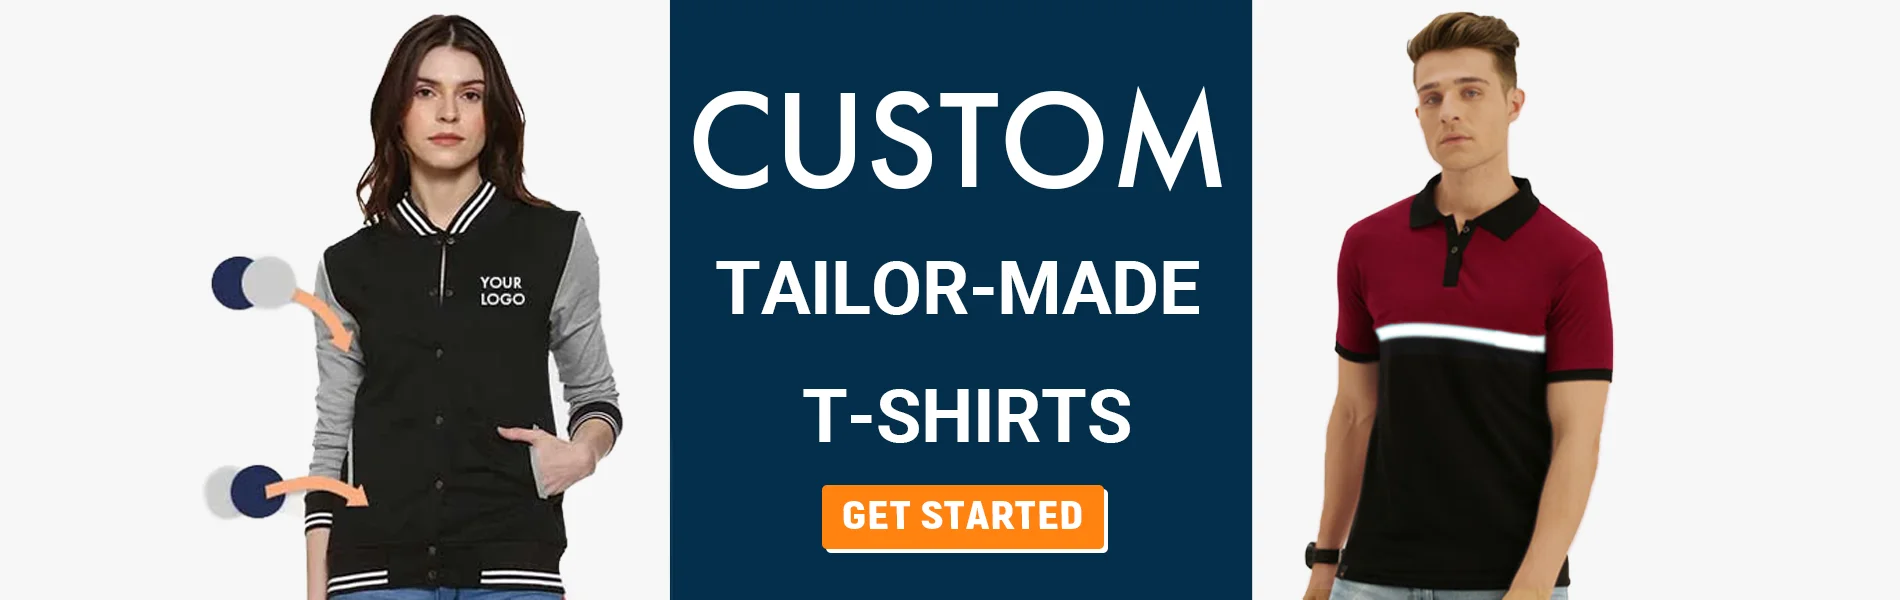 custom tailormade t-shirts gurgaon